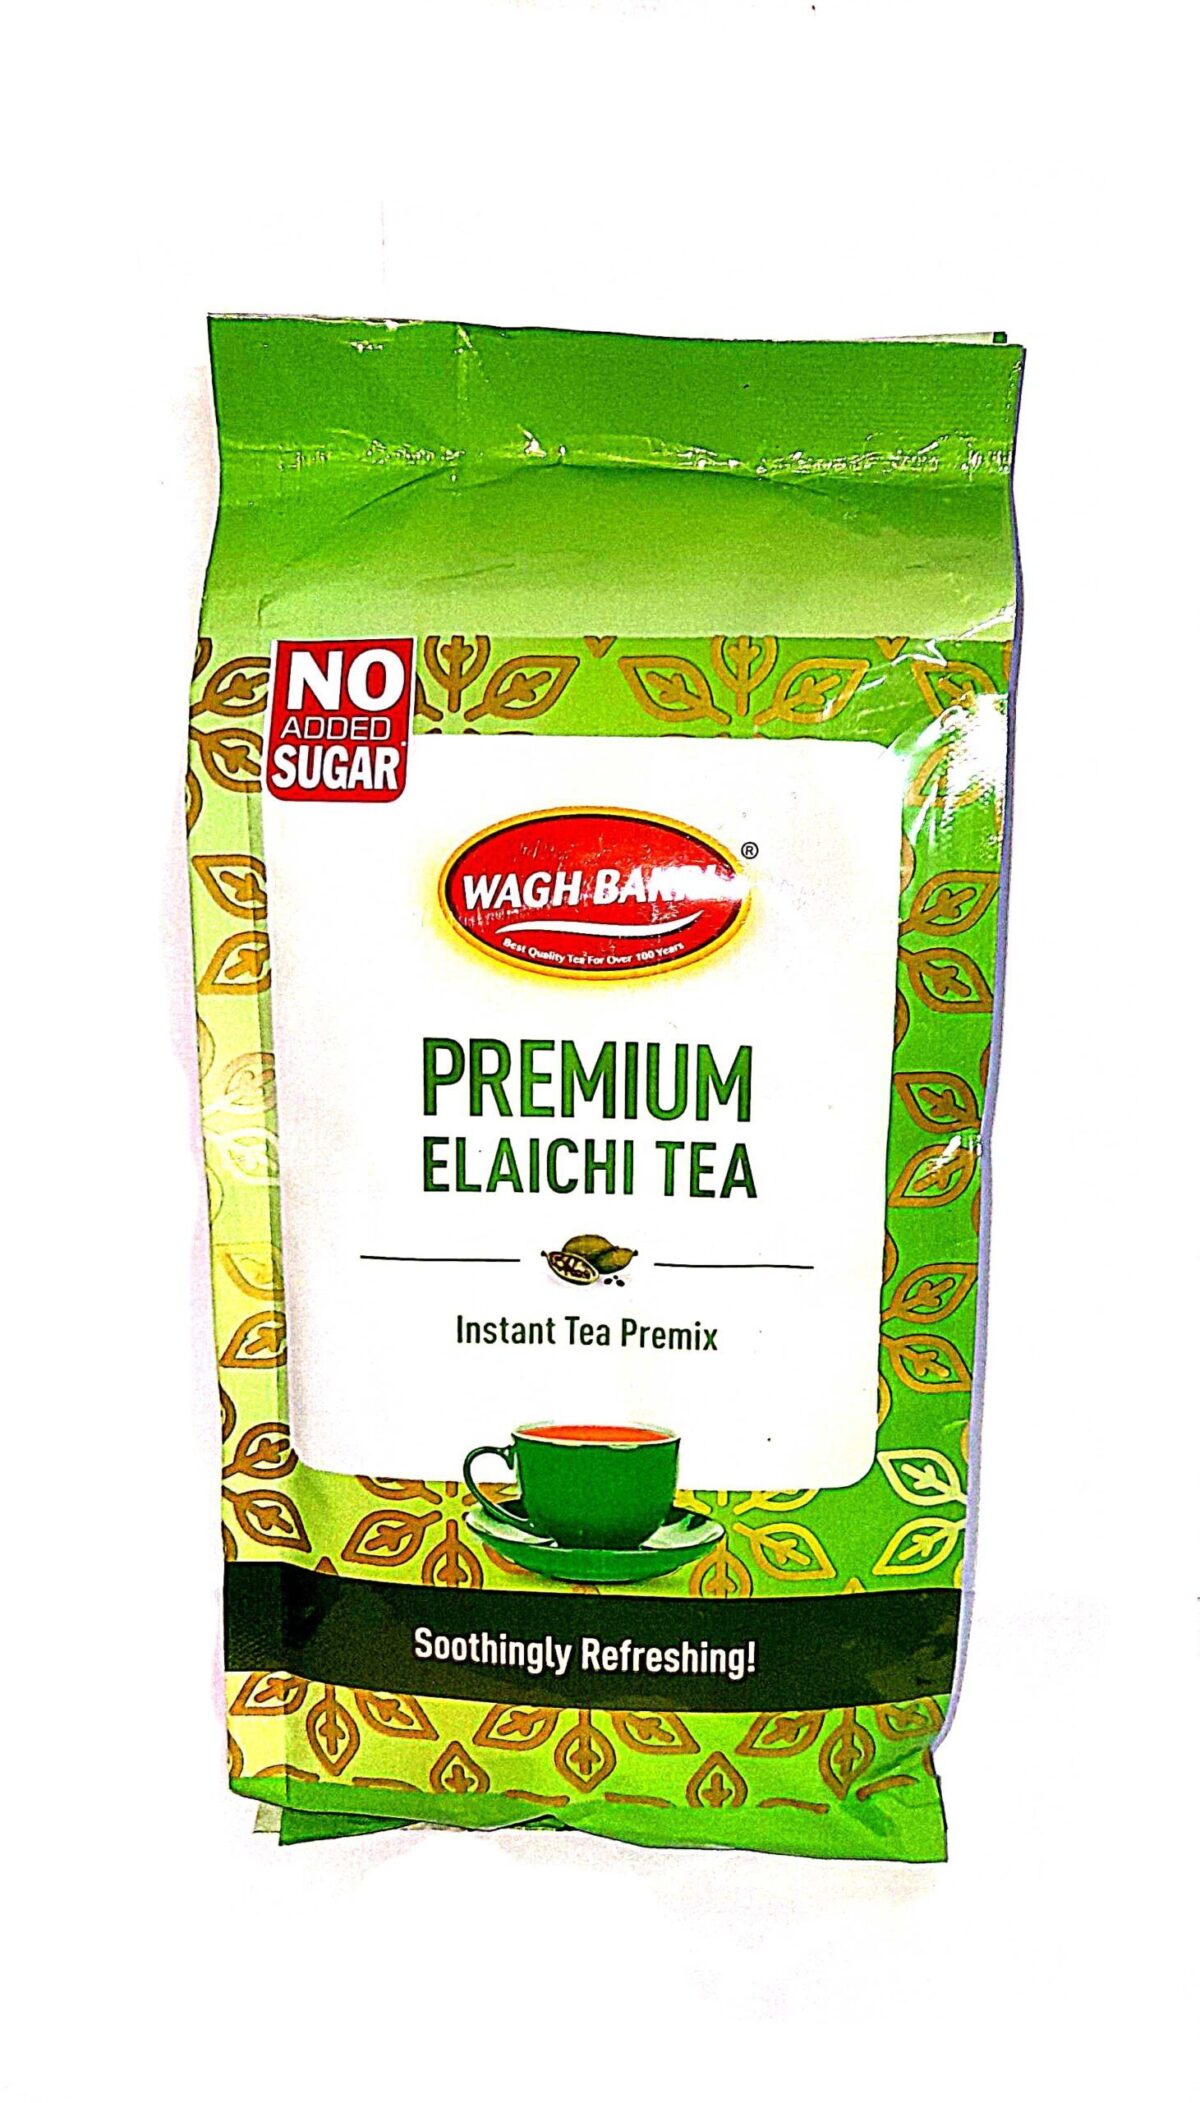 Wagh Bakri No Added Sugar Elaichi Tea Premix Front scaled